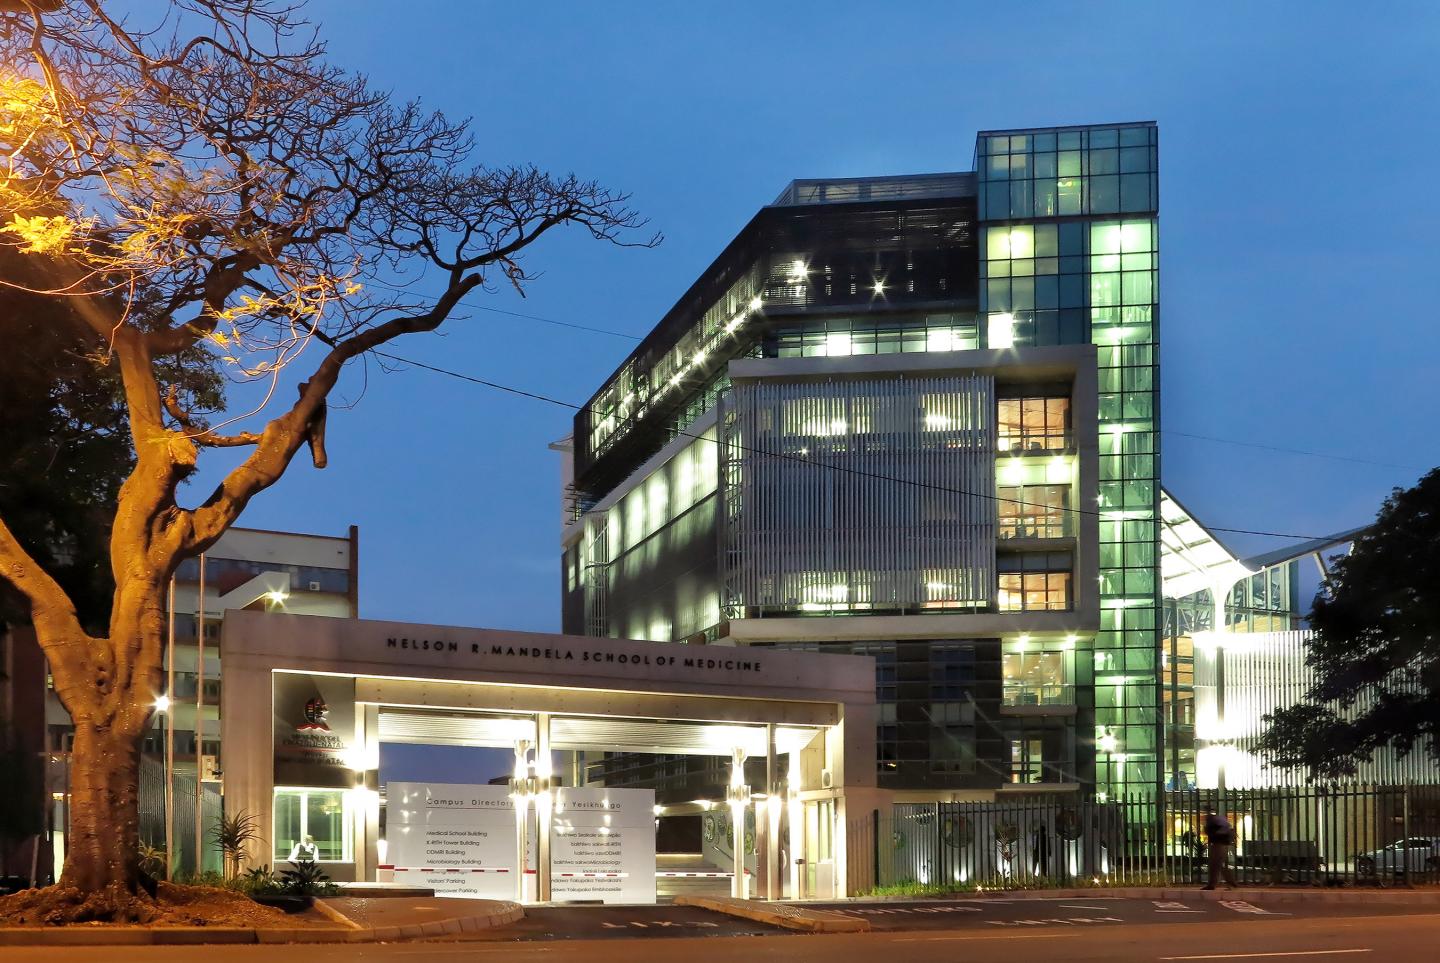 Africa Health Research Institute, or AHRI